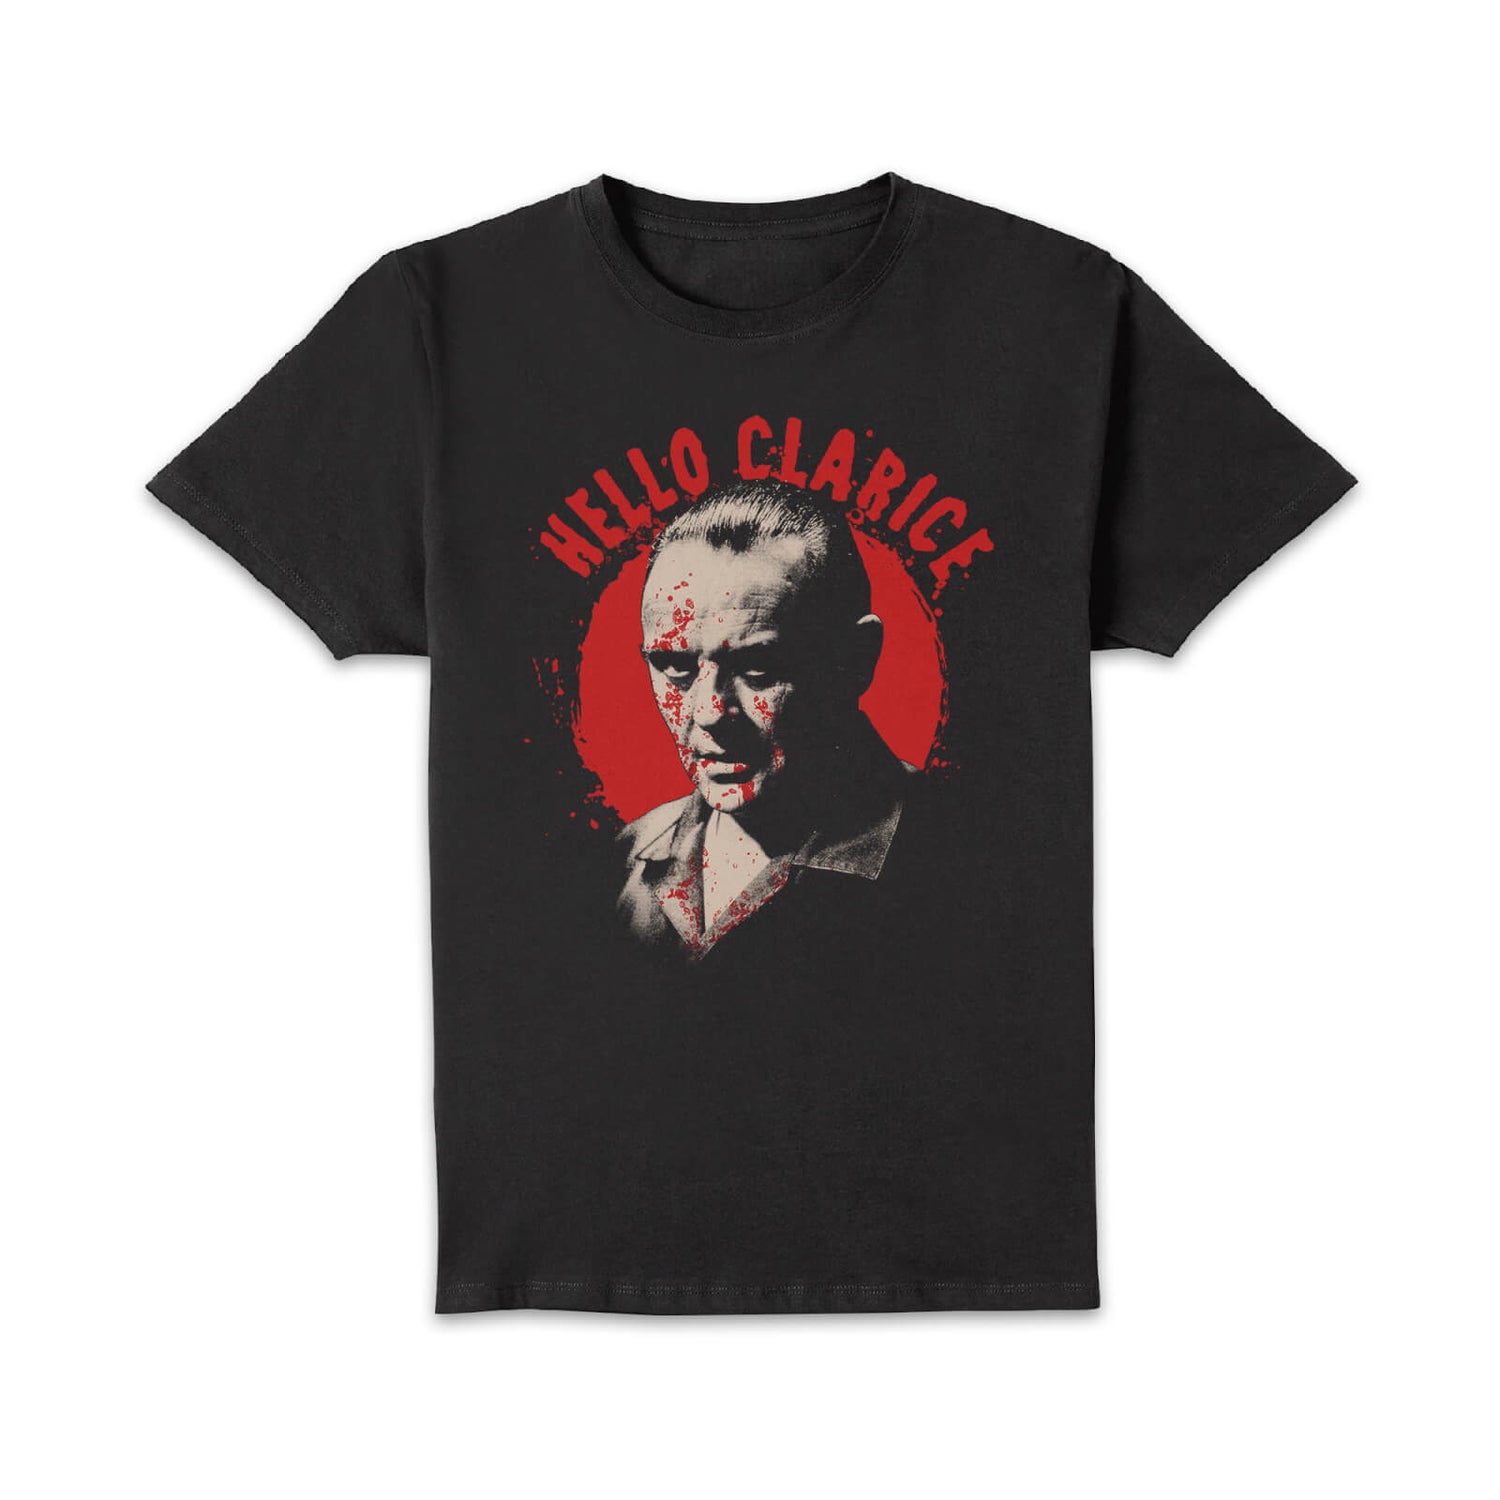 Hello Clarice Unisex T-Shirt - Black